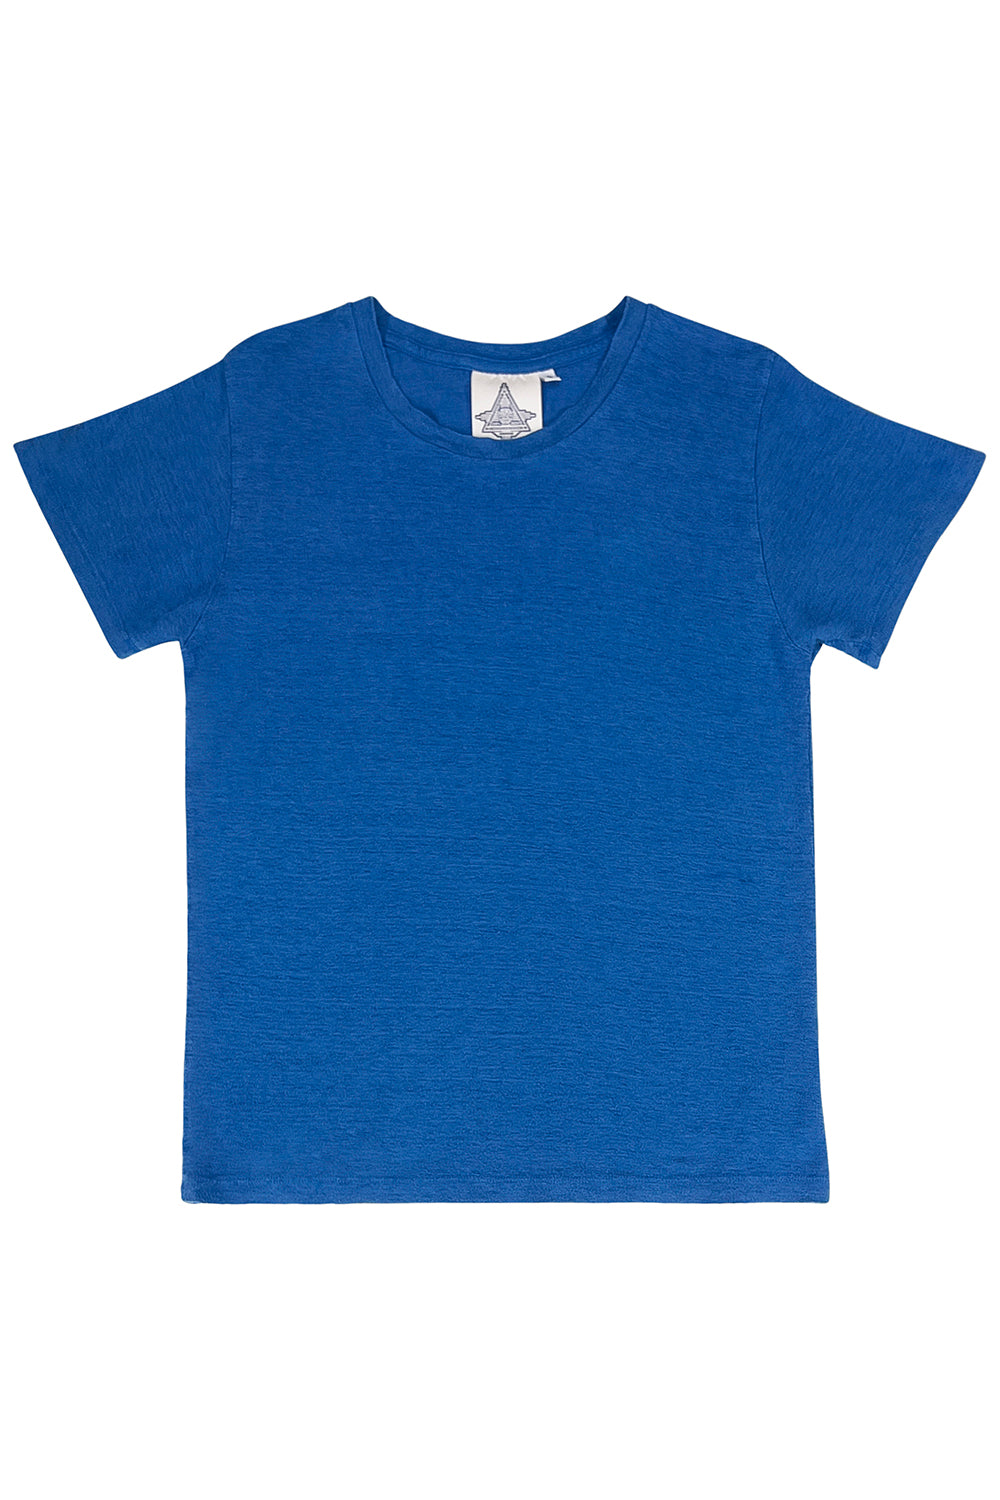 Madison 100% Hemp Tee | Jungmaven Hemp Clothing & Accessories / Color: Galaxy Blue